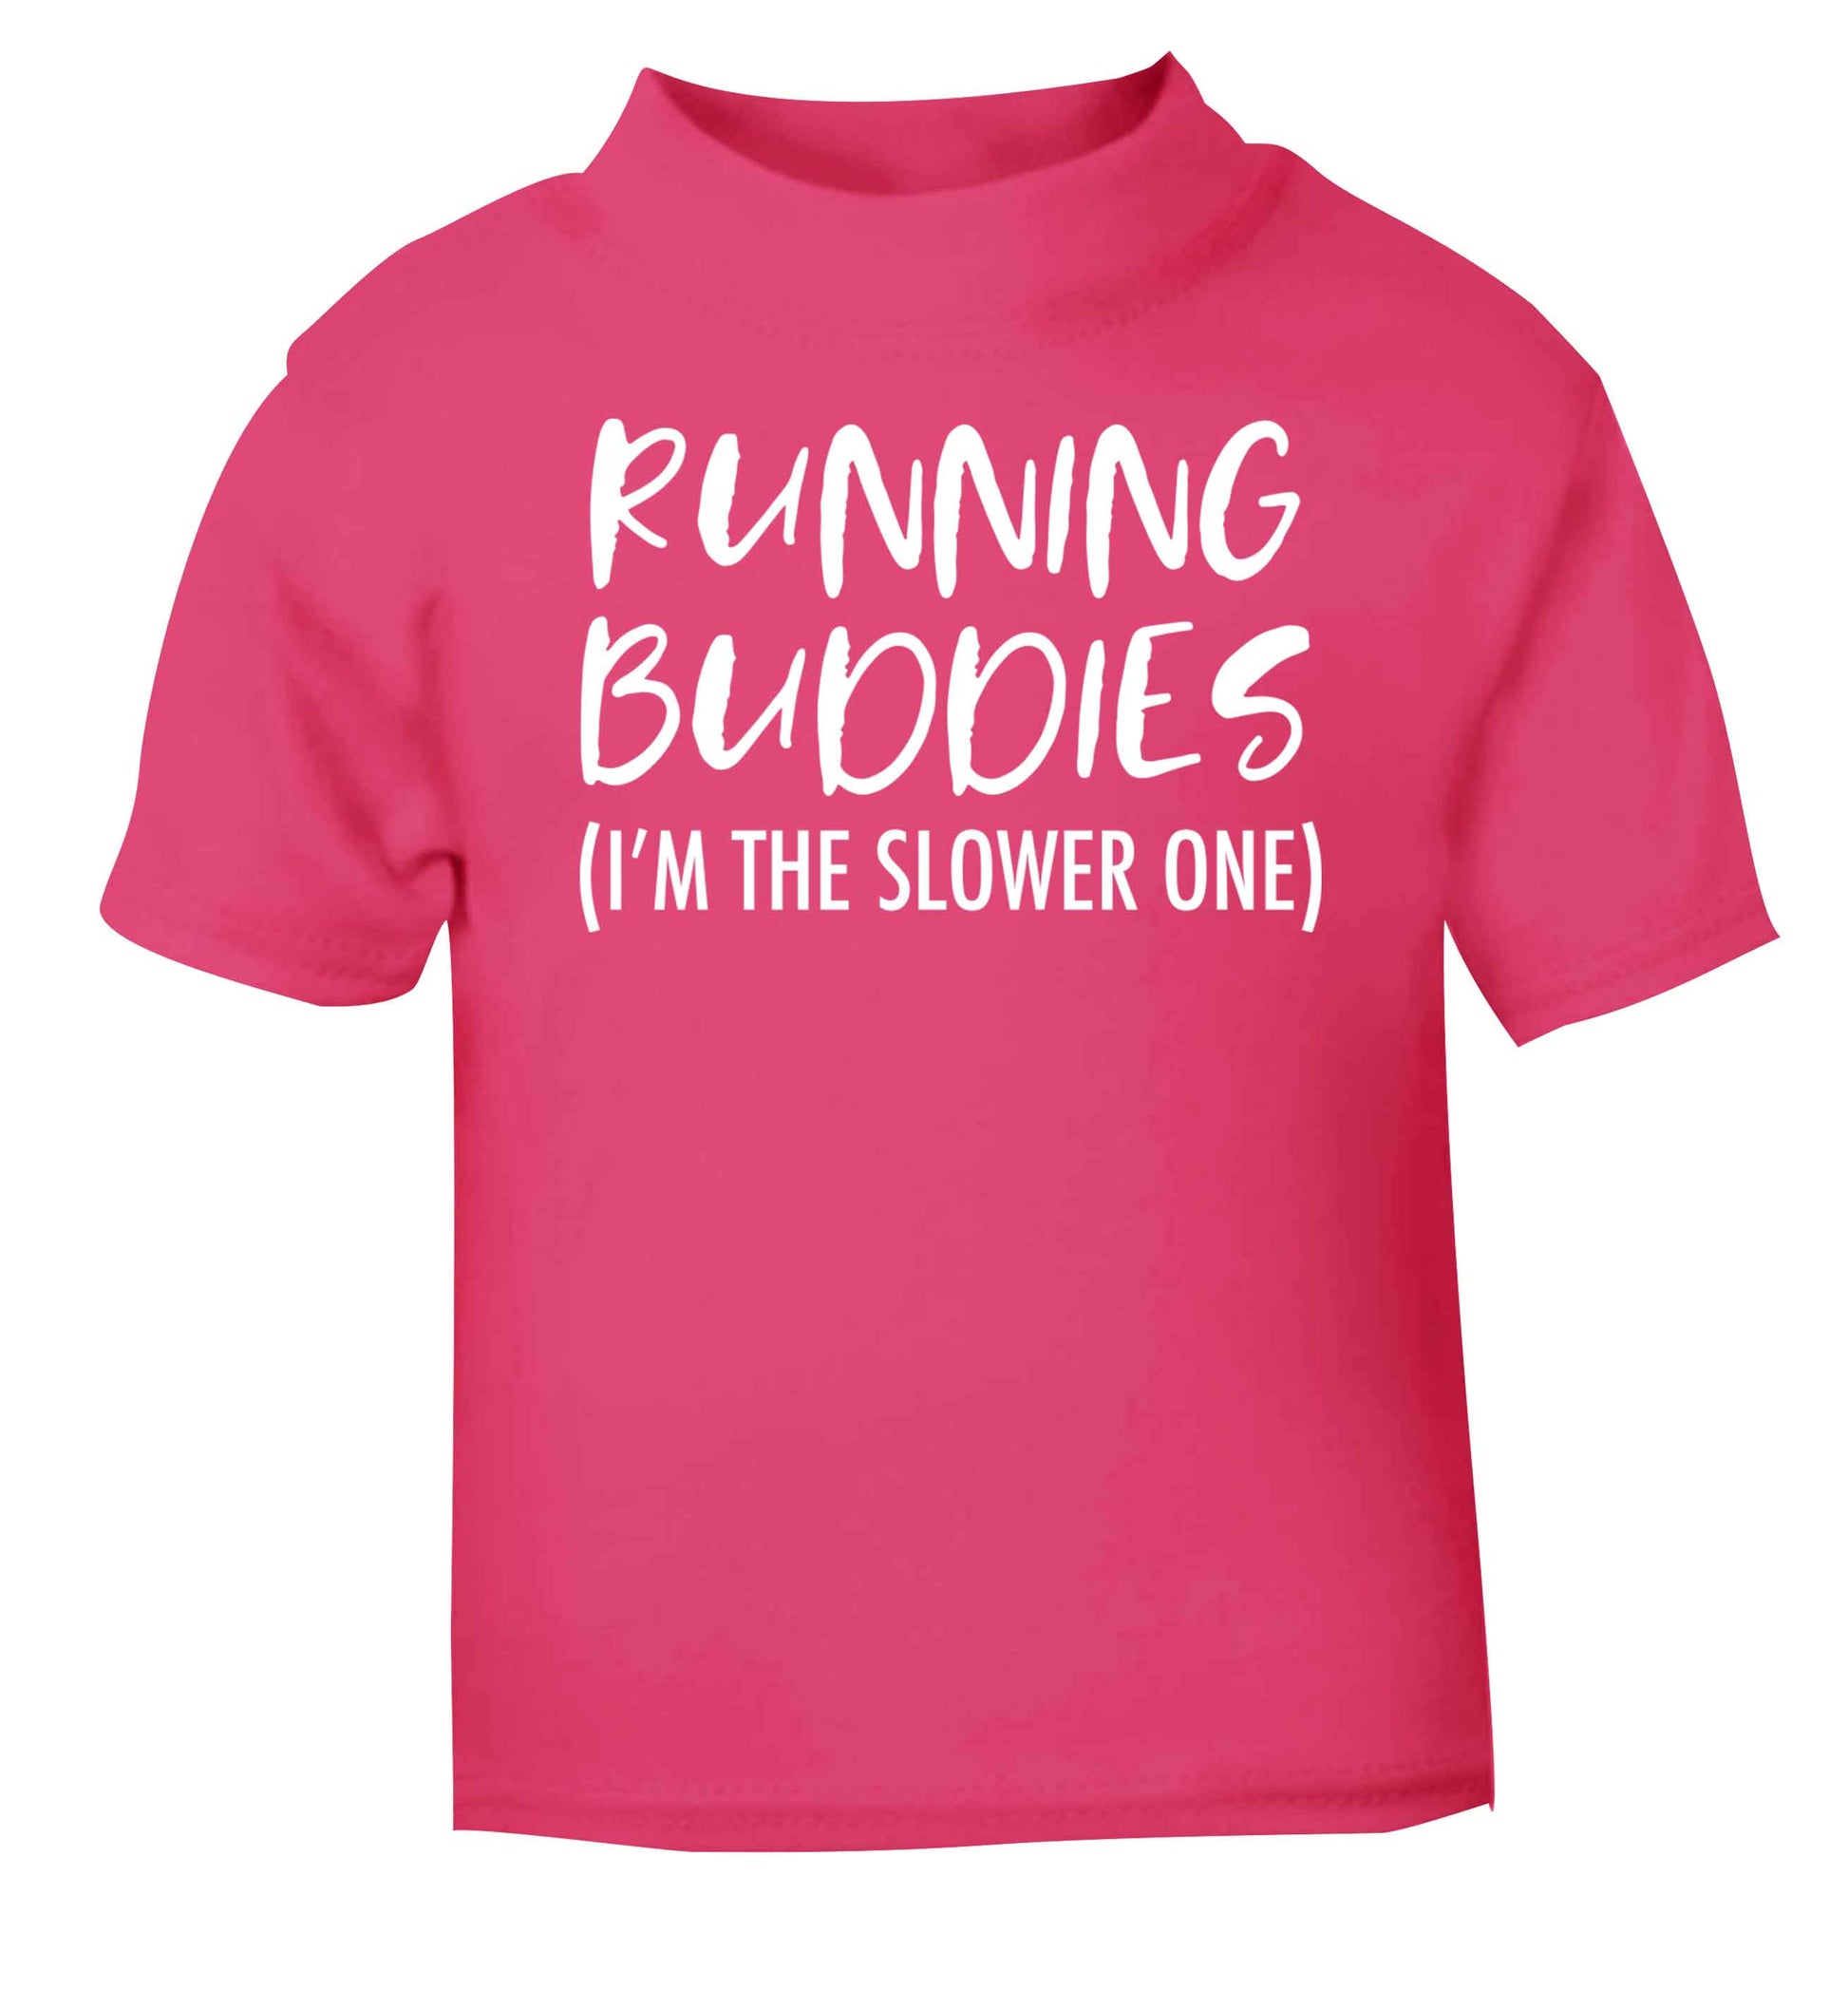 Running buddies (I'm the slower one) pink baby toddler Tshirt 2 Years